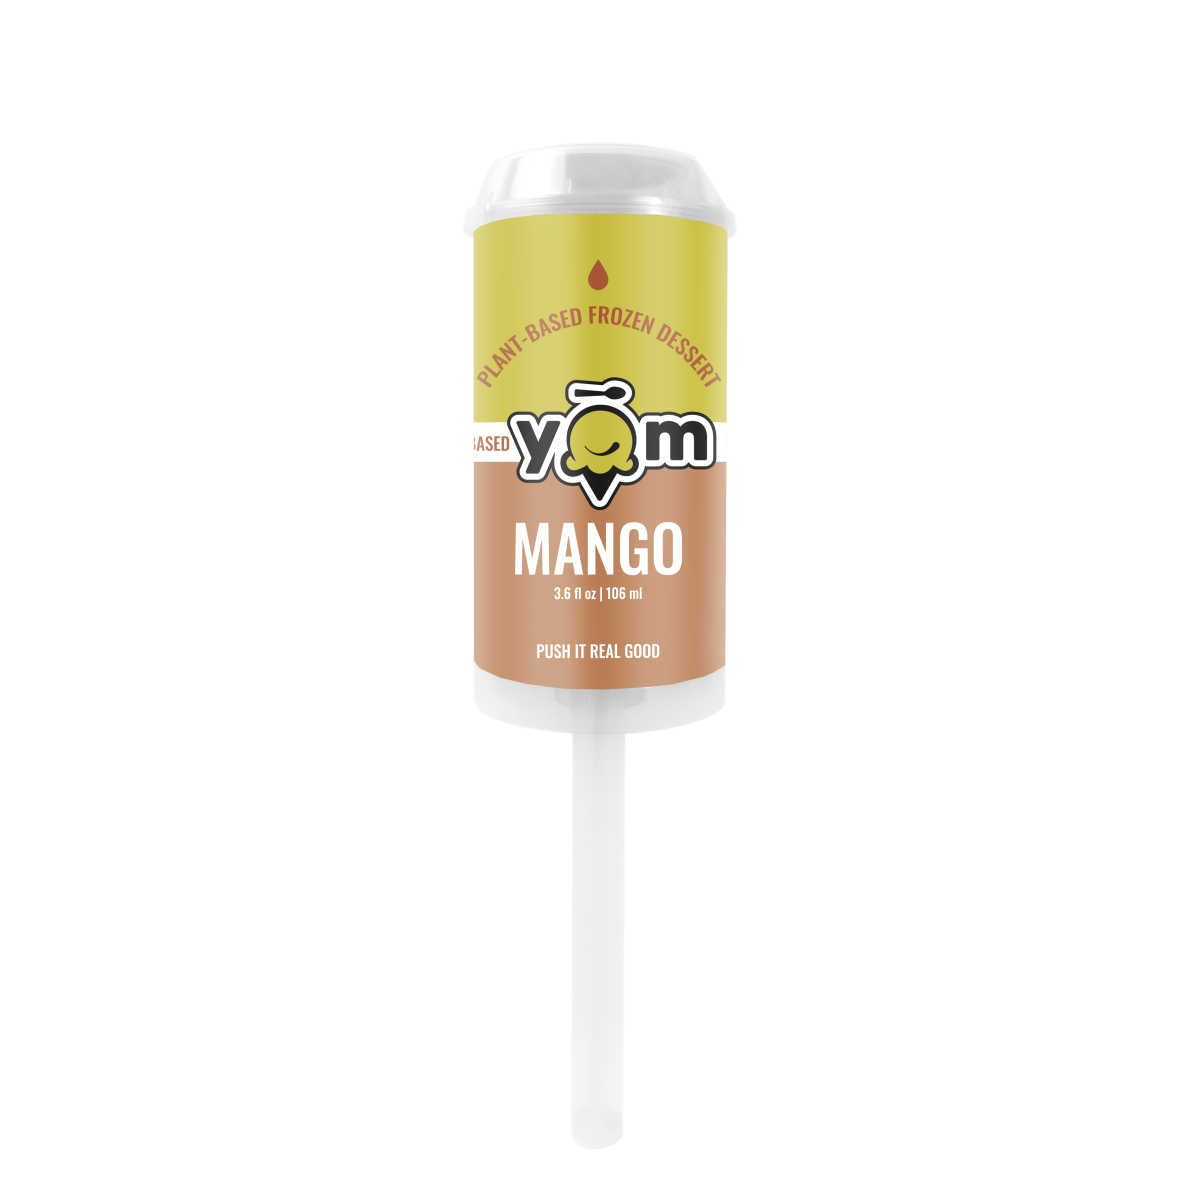 A scoop of MANGO (V)